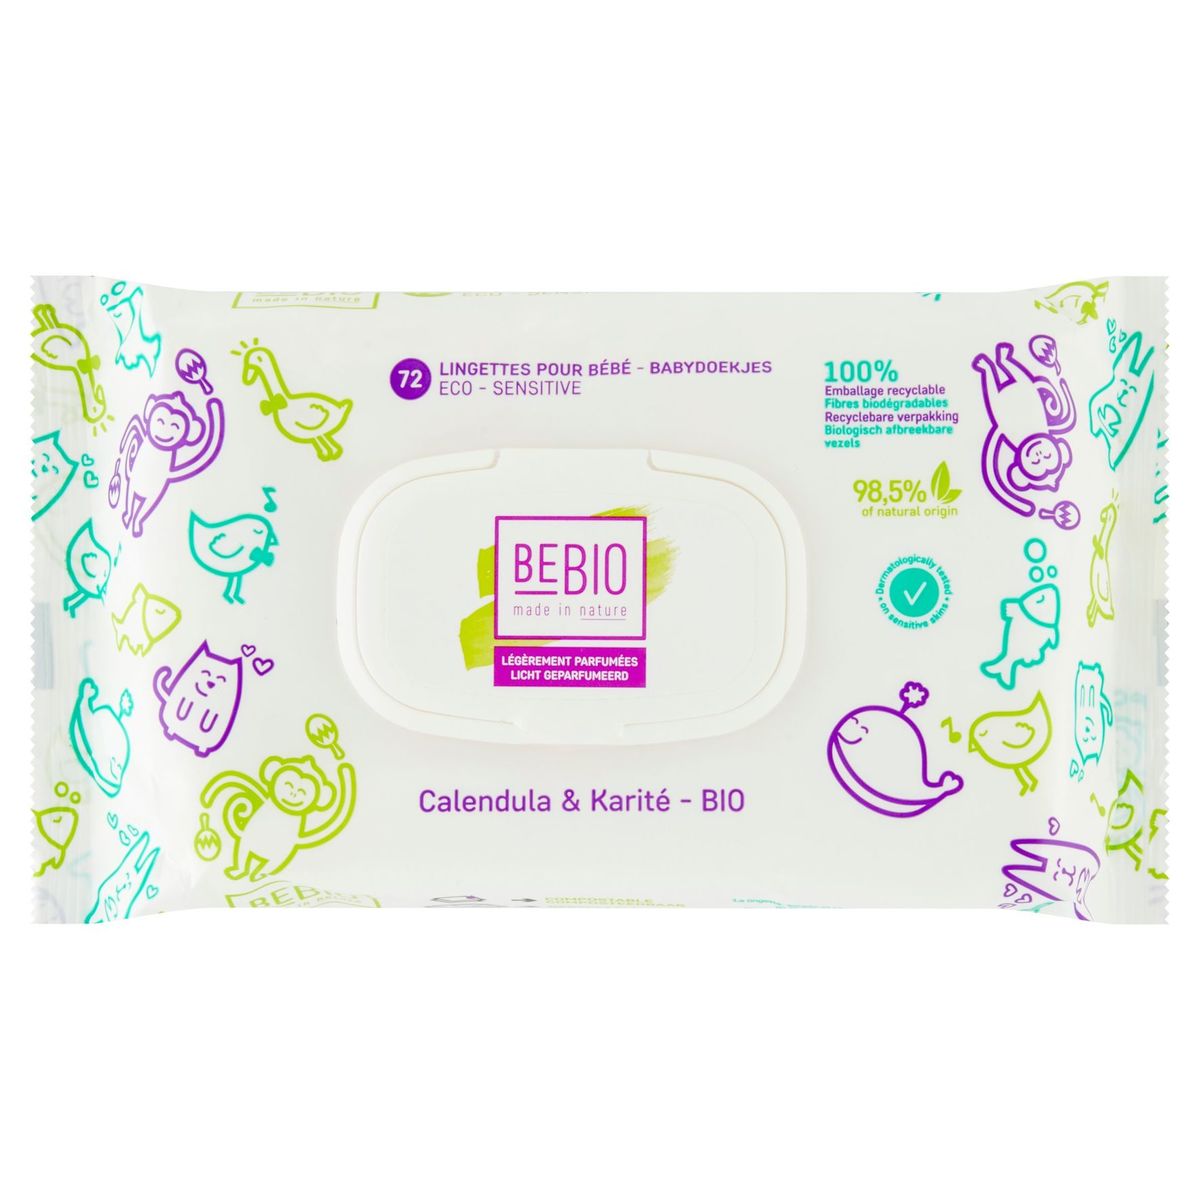 Bebio Babydoekjes Eco - Sensitive Calendula & Karité - Bio 72 Stuks